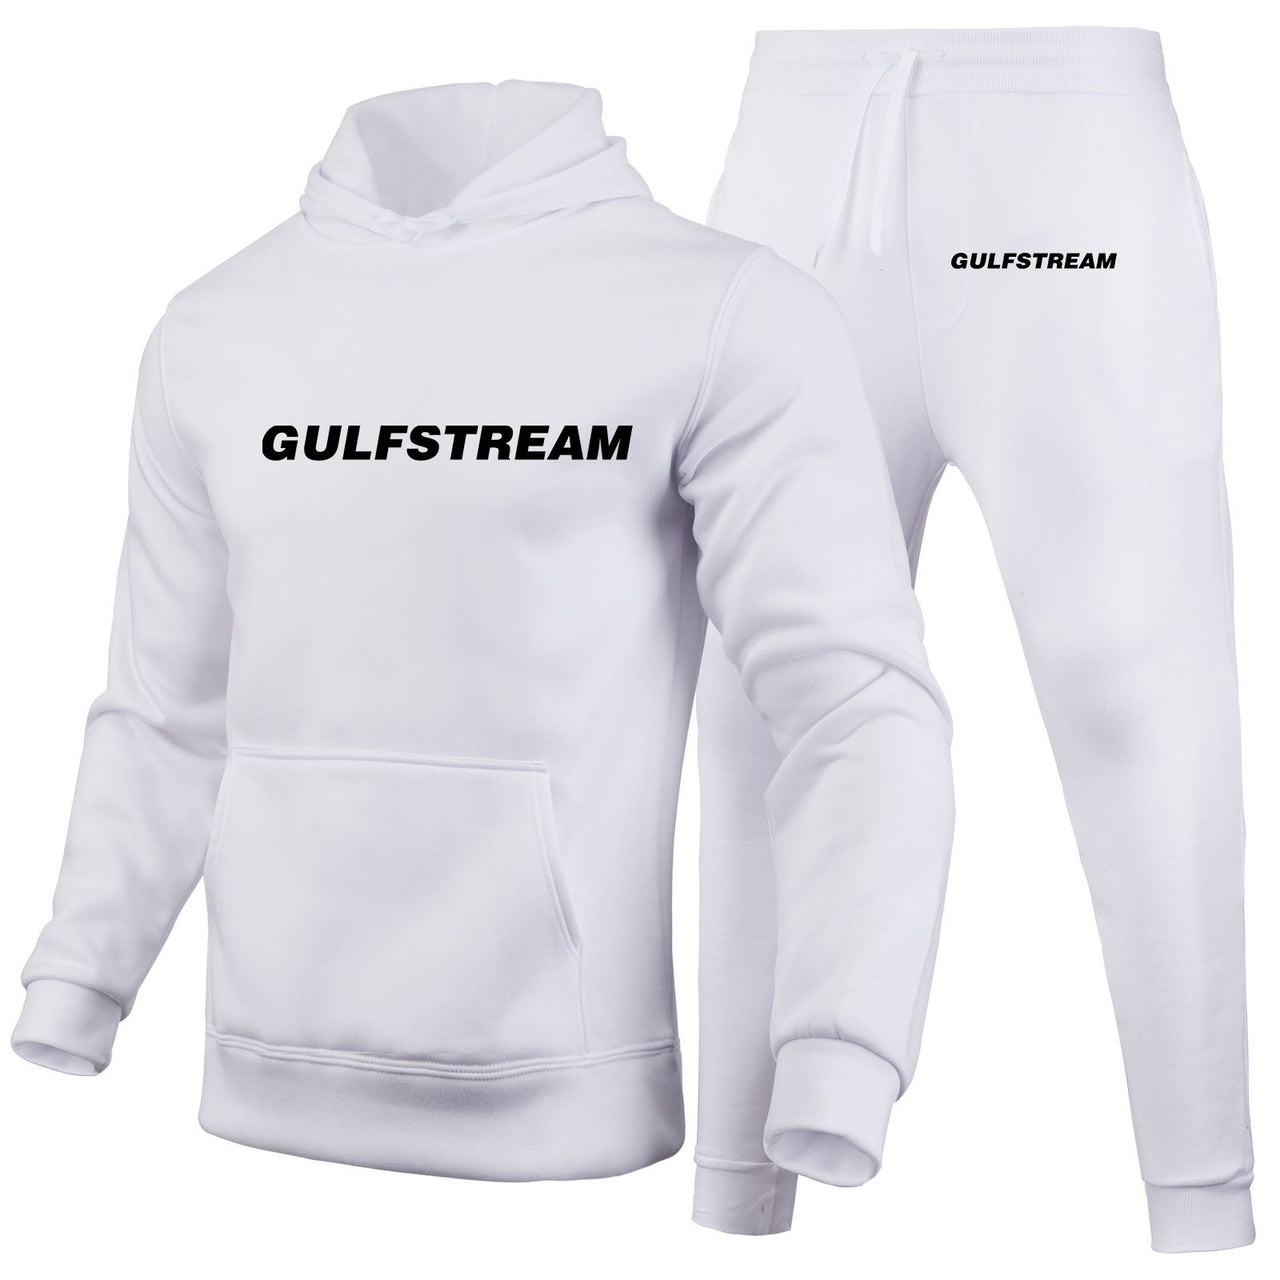 Gulfstream & Text Designed Hoodies & Sweatpants Set